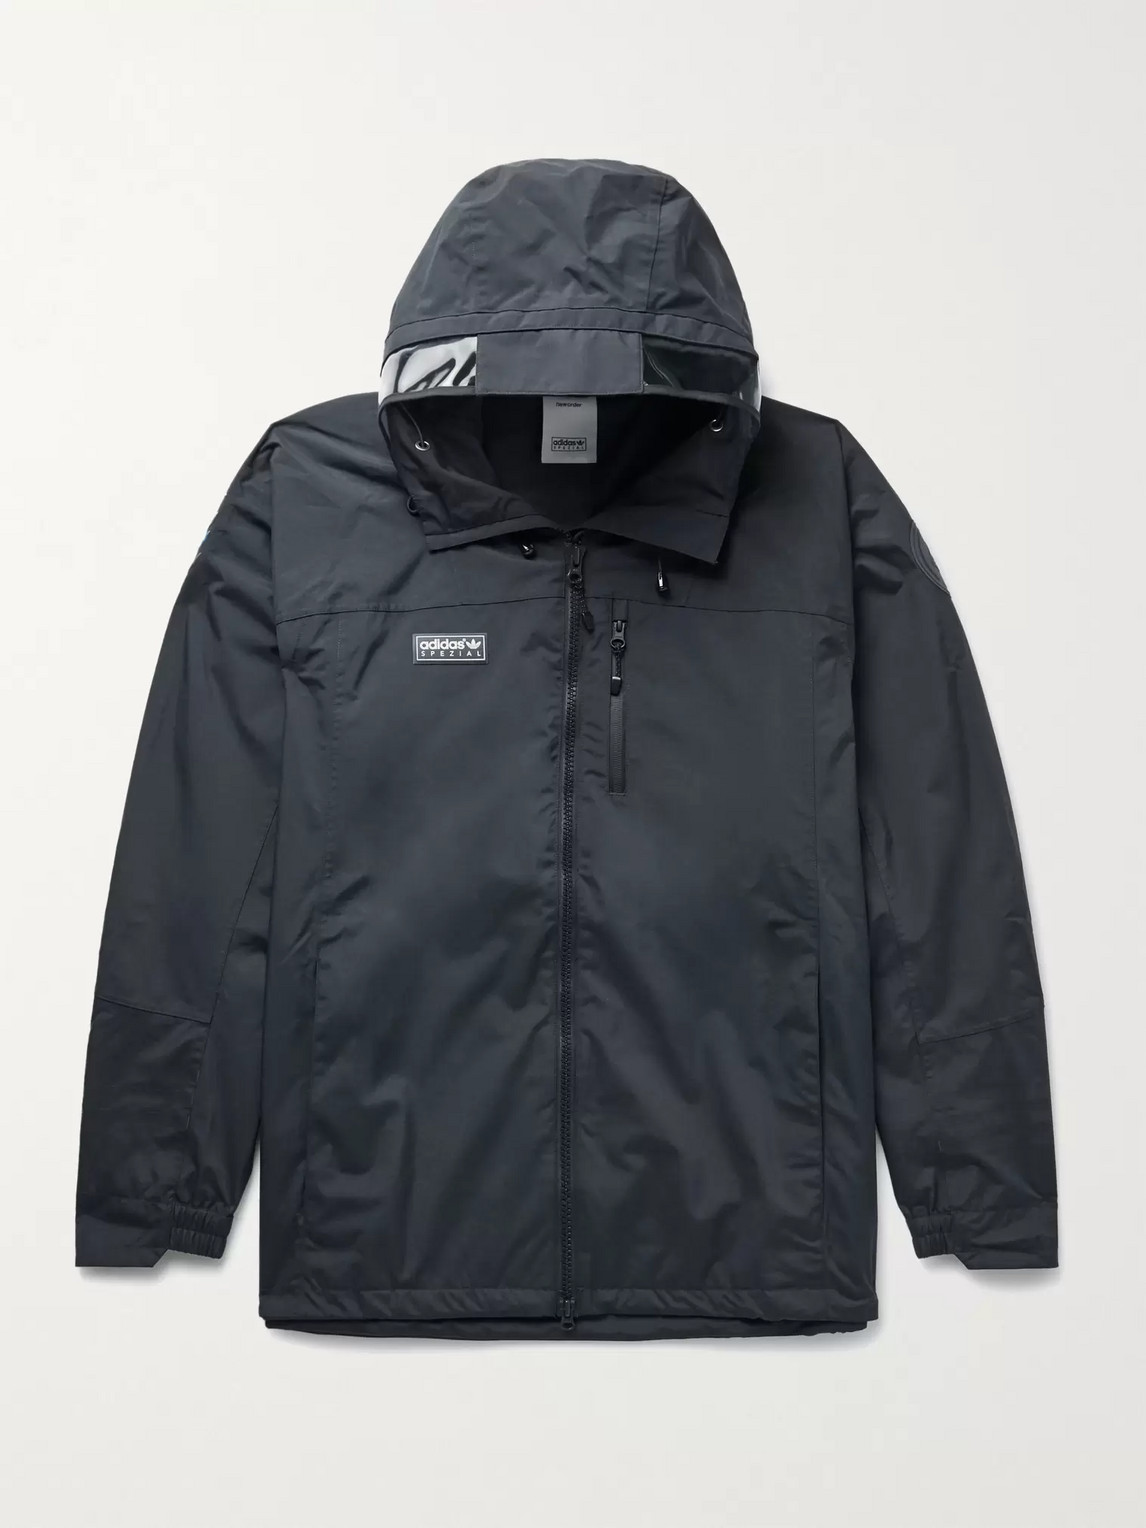 Adidas Consortium New Order Spezial Pvc-trimmed Logo-appliquéd Shell Hooded Jacket In Gray